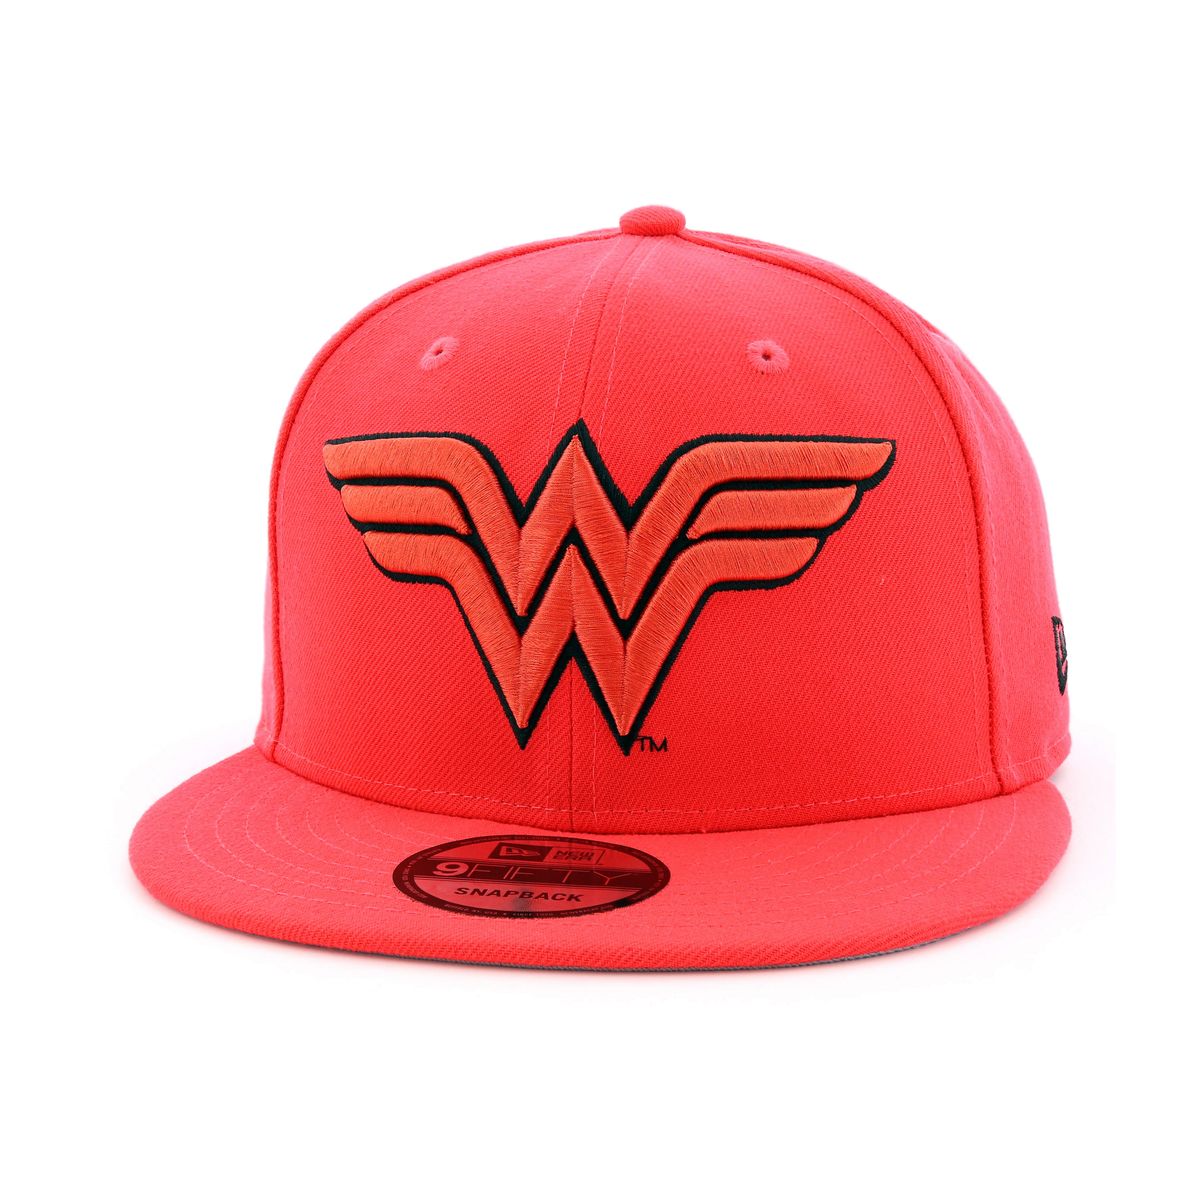 New Era Wonder Woman Men's Cap Red